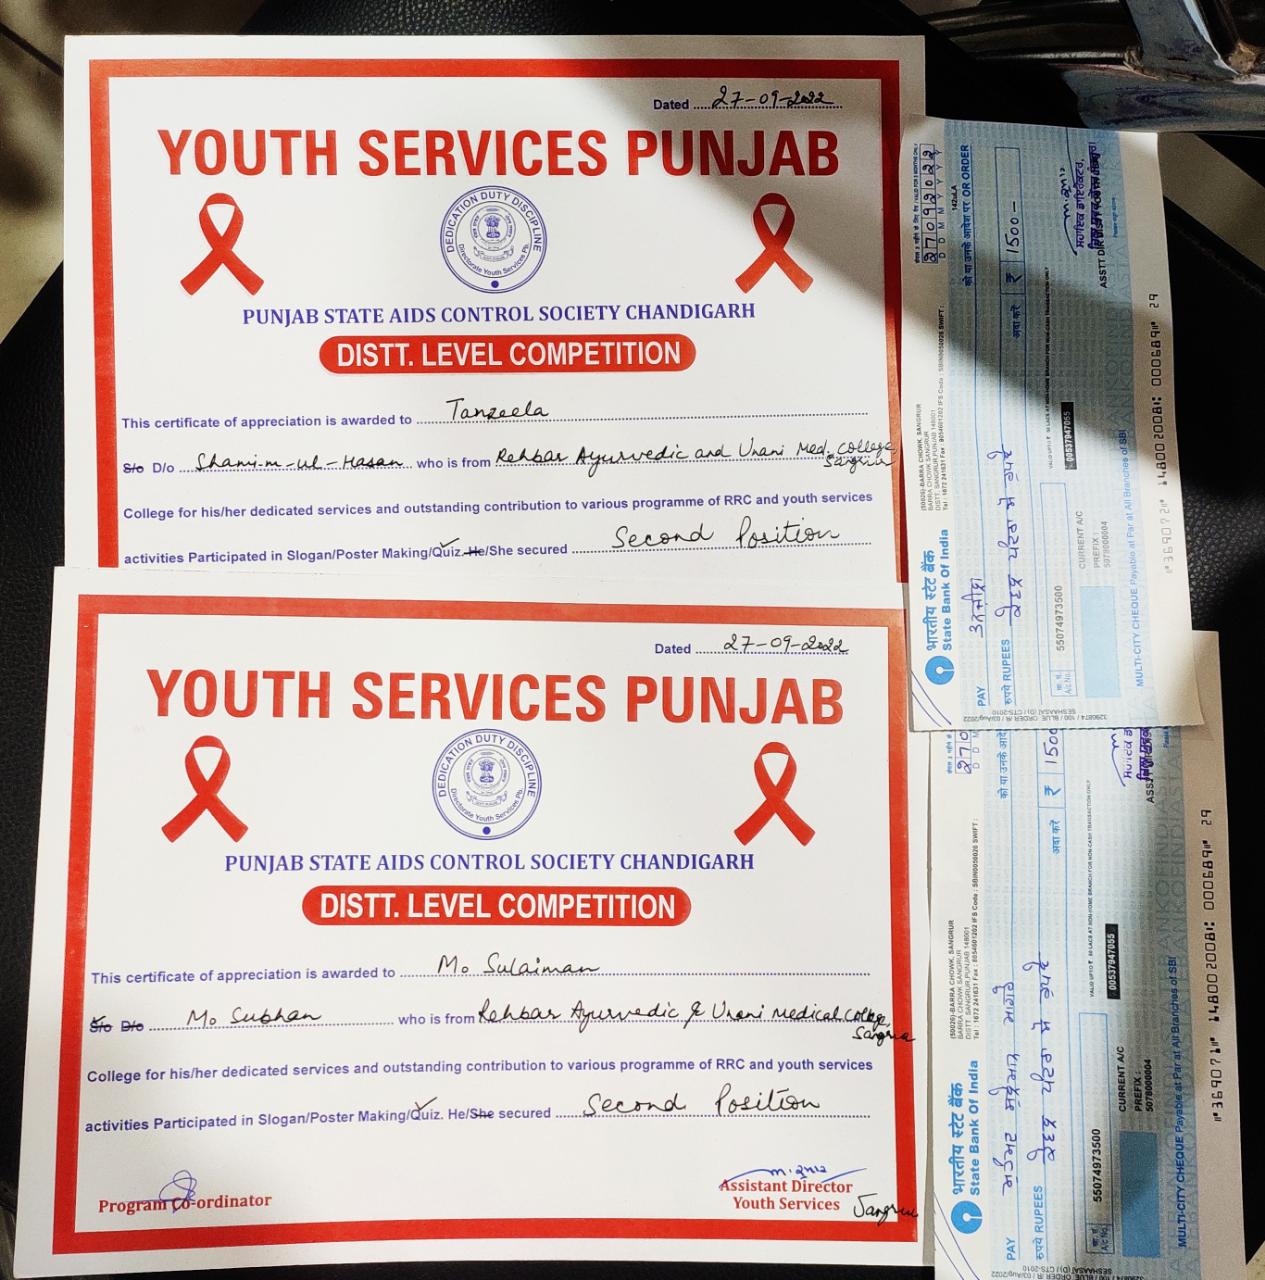 Punjab State AIDS Control Society Chandigarh